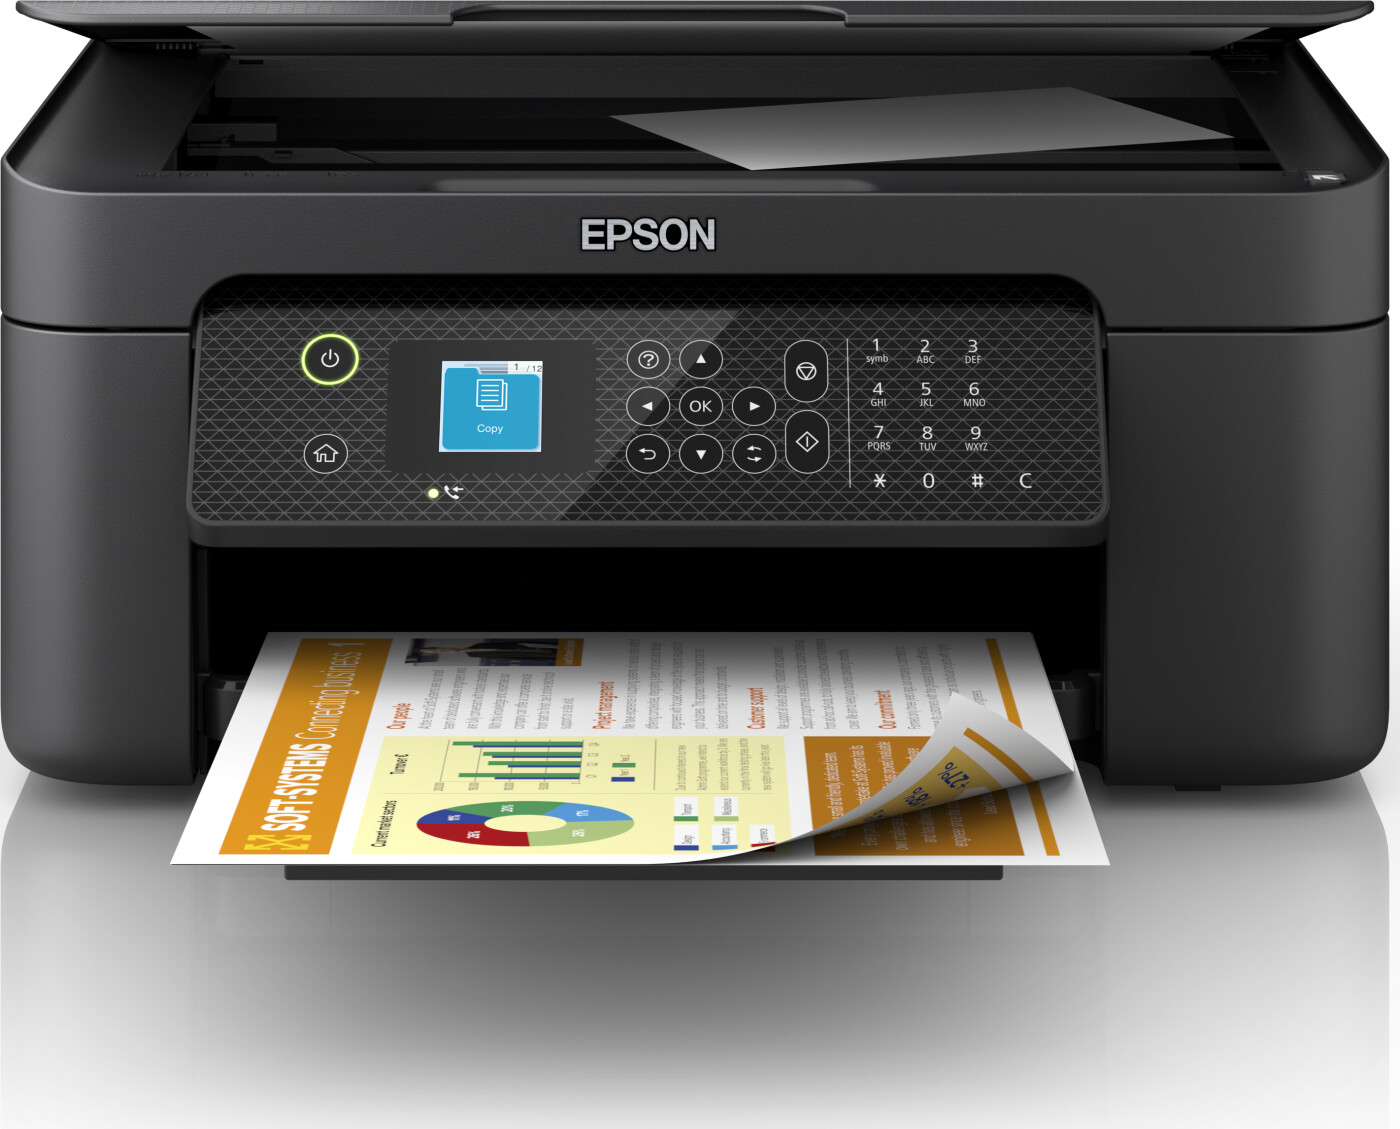 Billede af Epson Workforce Wf-2910dwf - Wifi All In One Printer - 33 Spm hos Gucca.dk